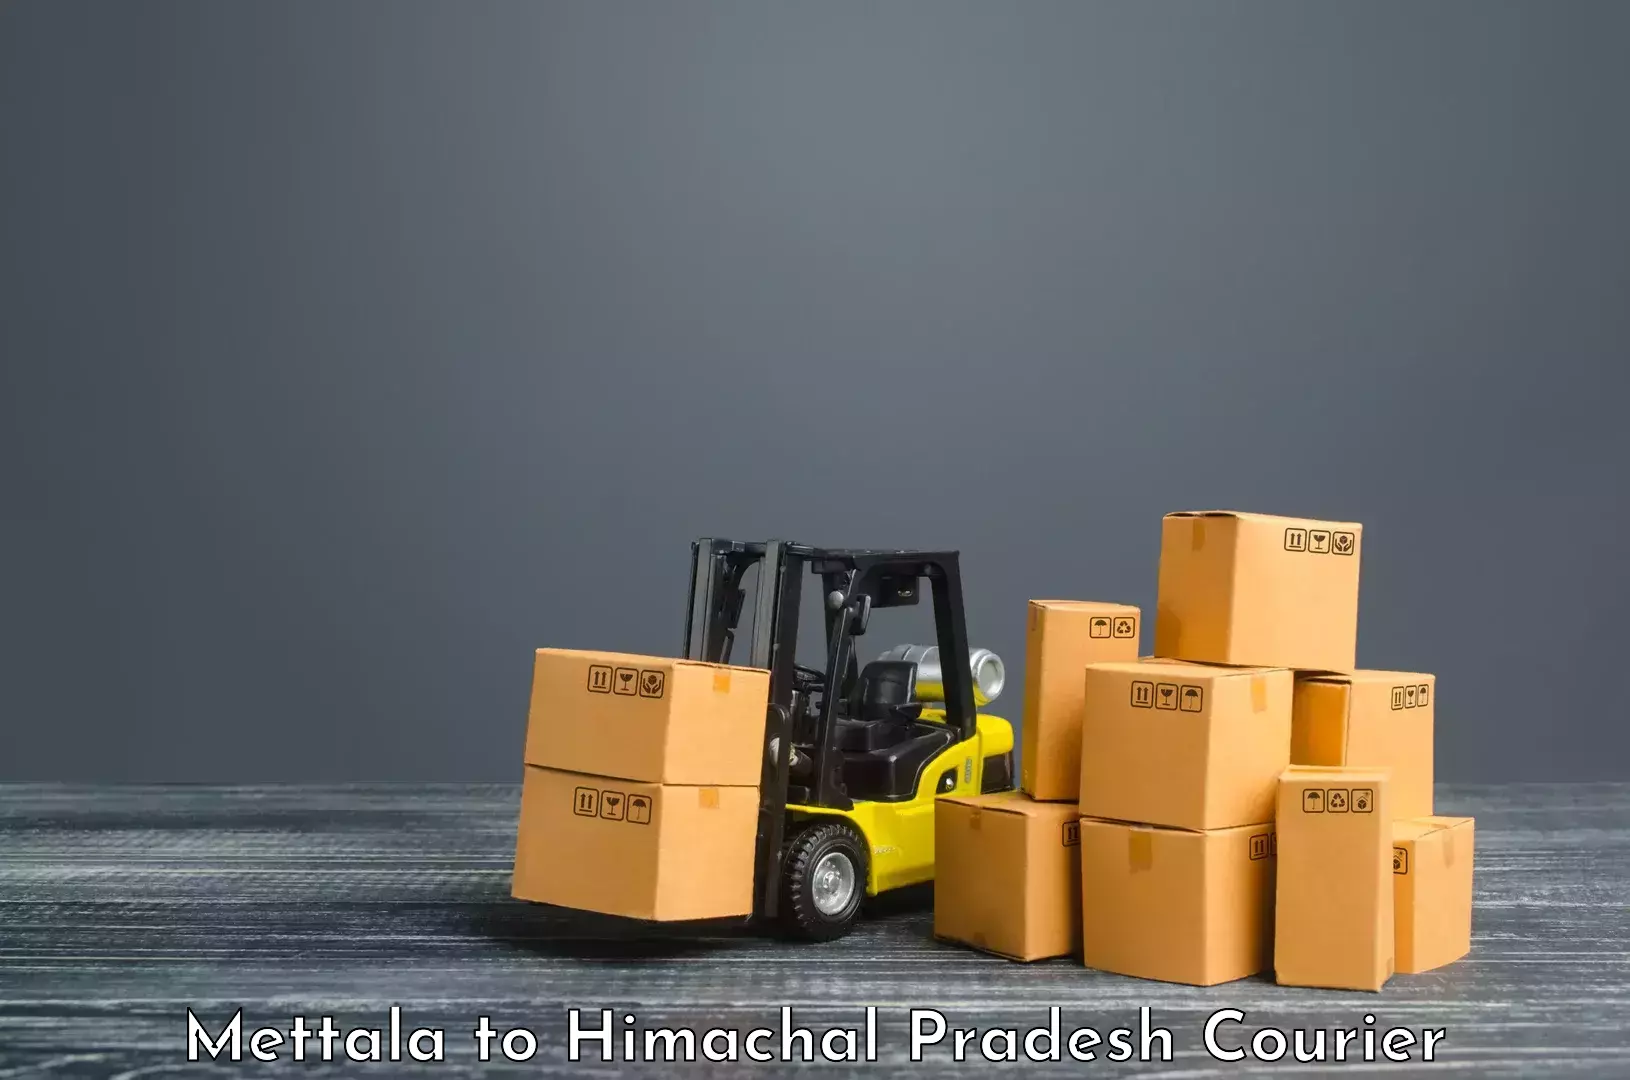 User-friendly delivery service Mettala to Himachal Pradesh